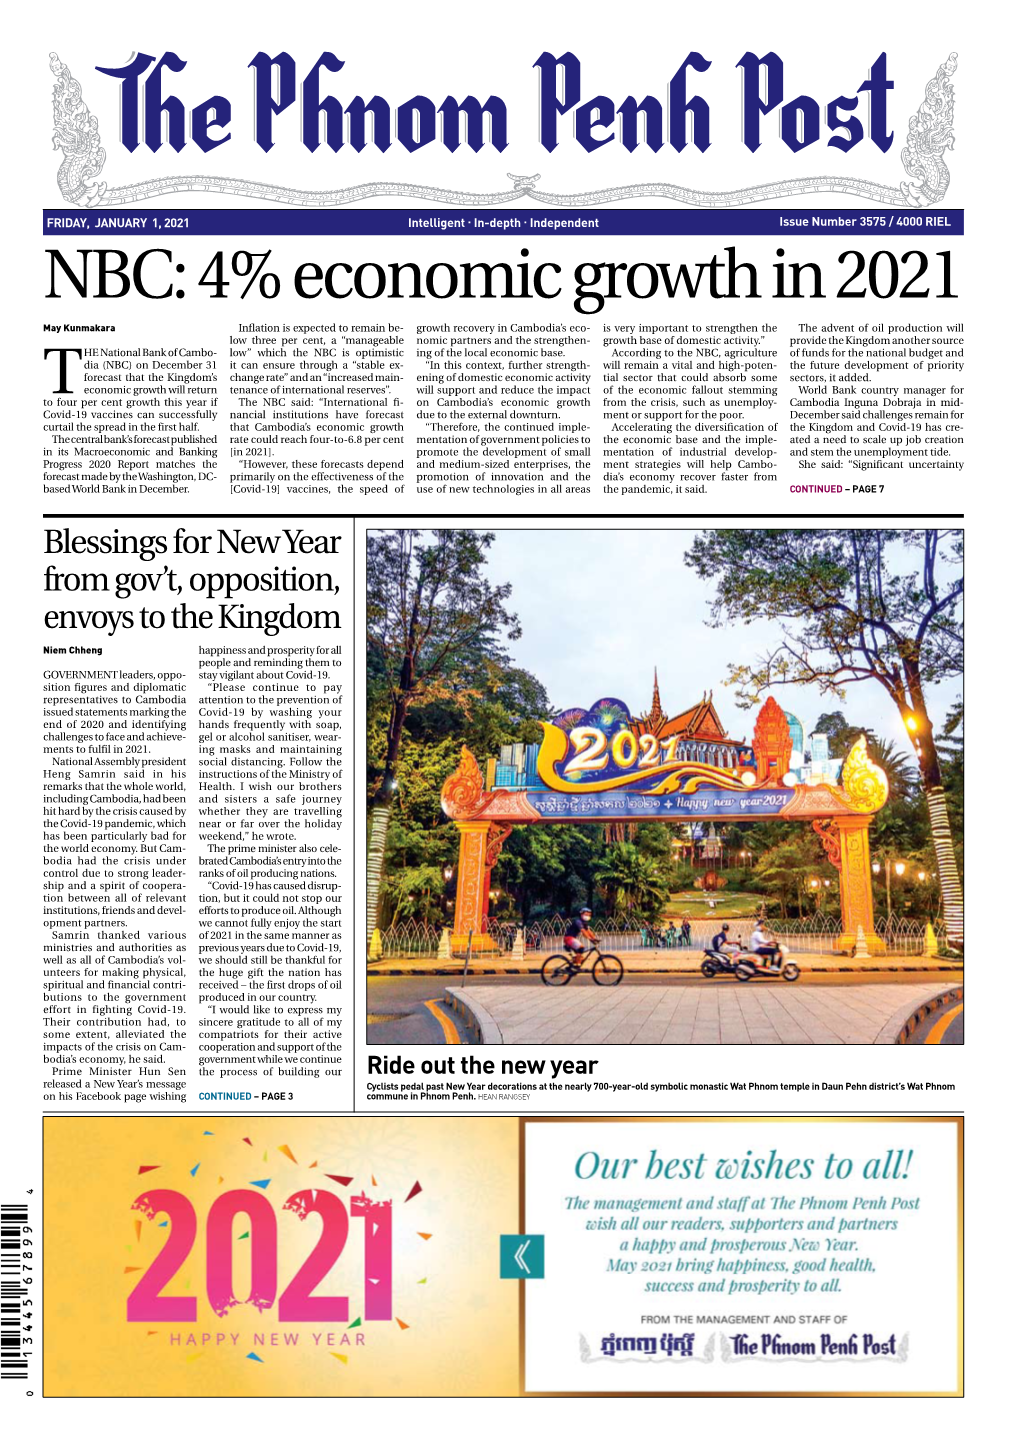 NBC: 4% Economic Growth in 2021